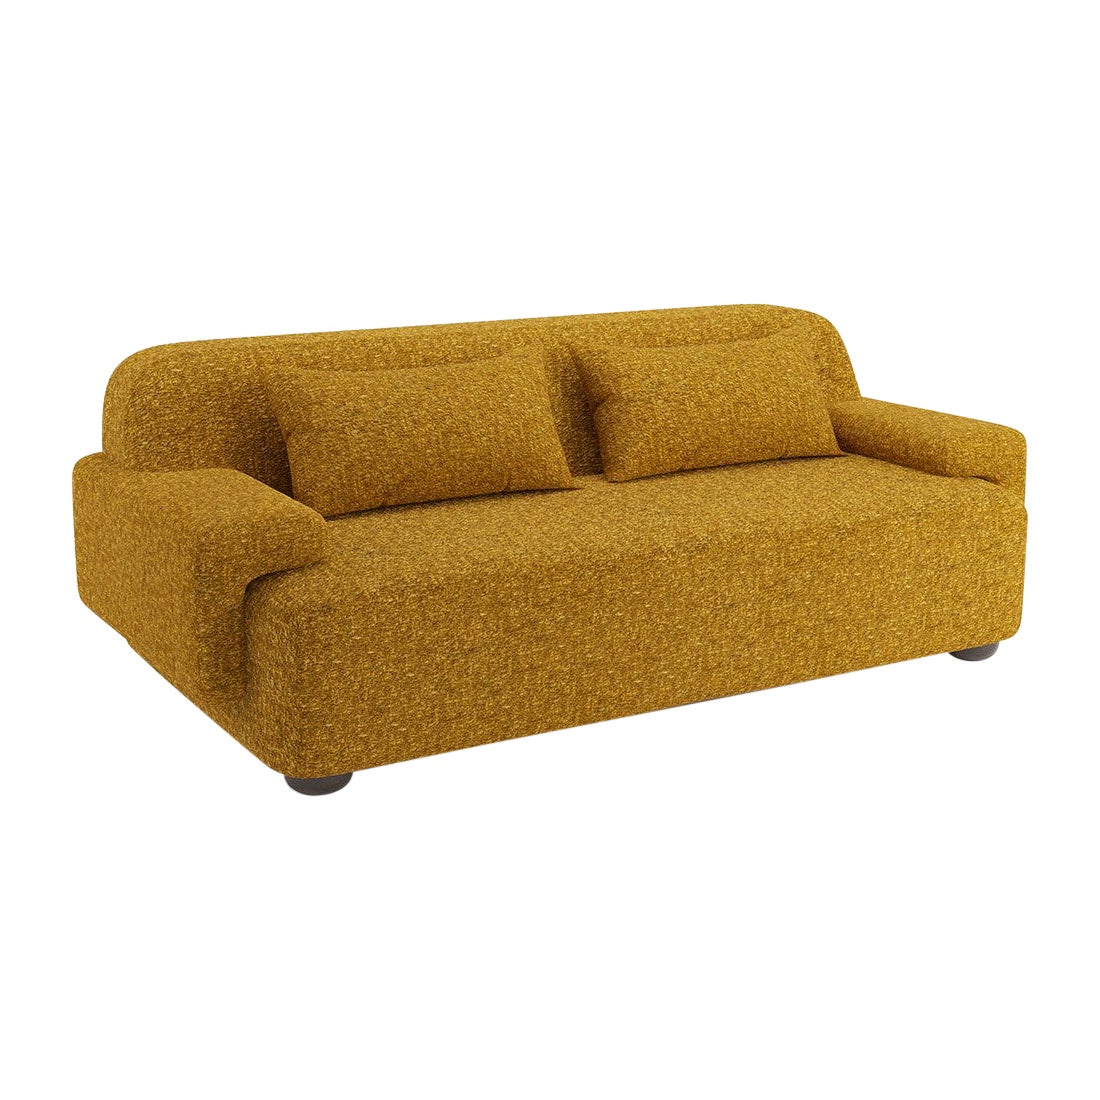 Popus Editions Lena 3 Seater Sofa in Amber Venice Chenille Velvet Upholstery For Sale